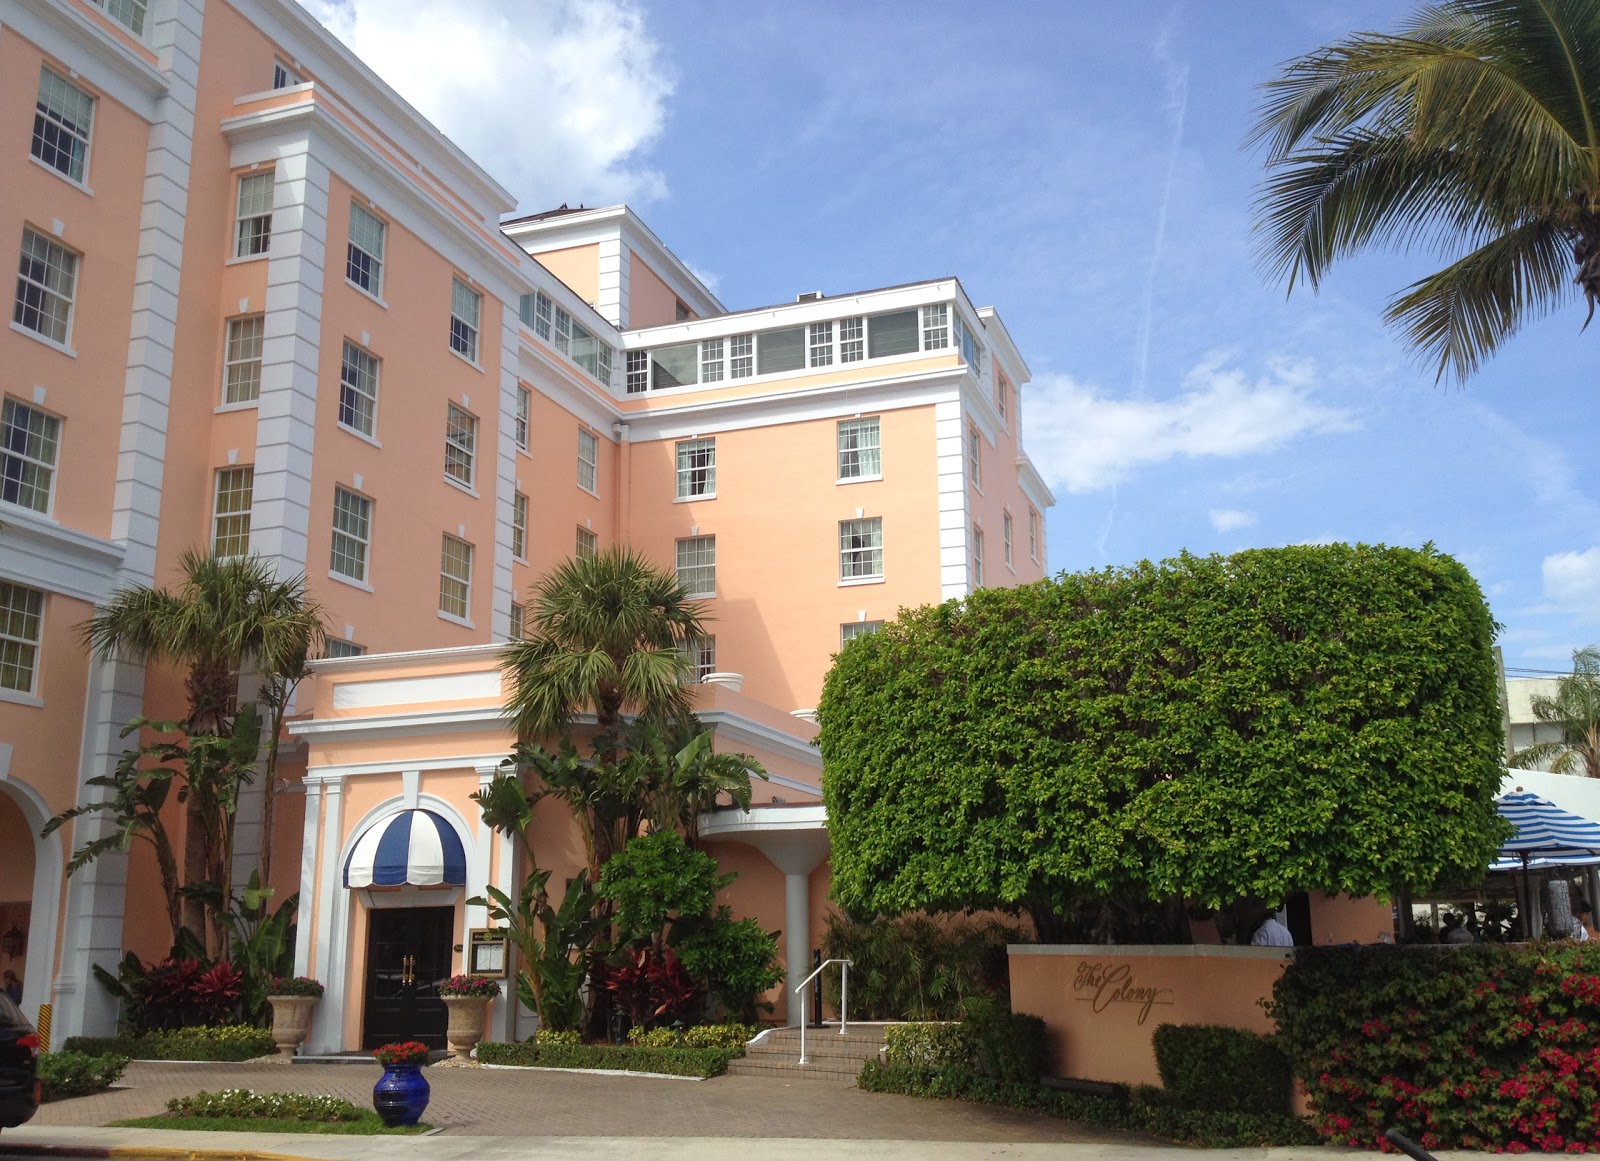 Carleton Varney Rejuvenates The Colony Hotel In Palm Beach